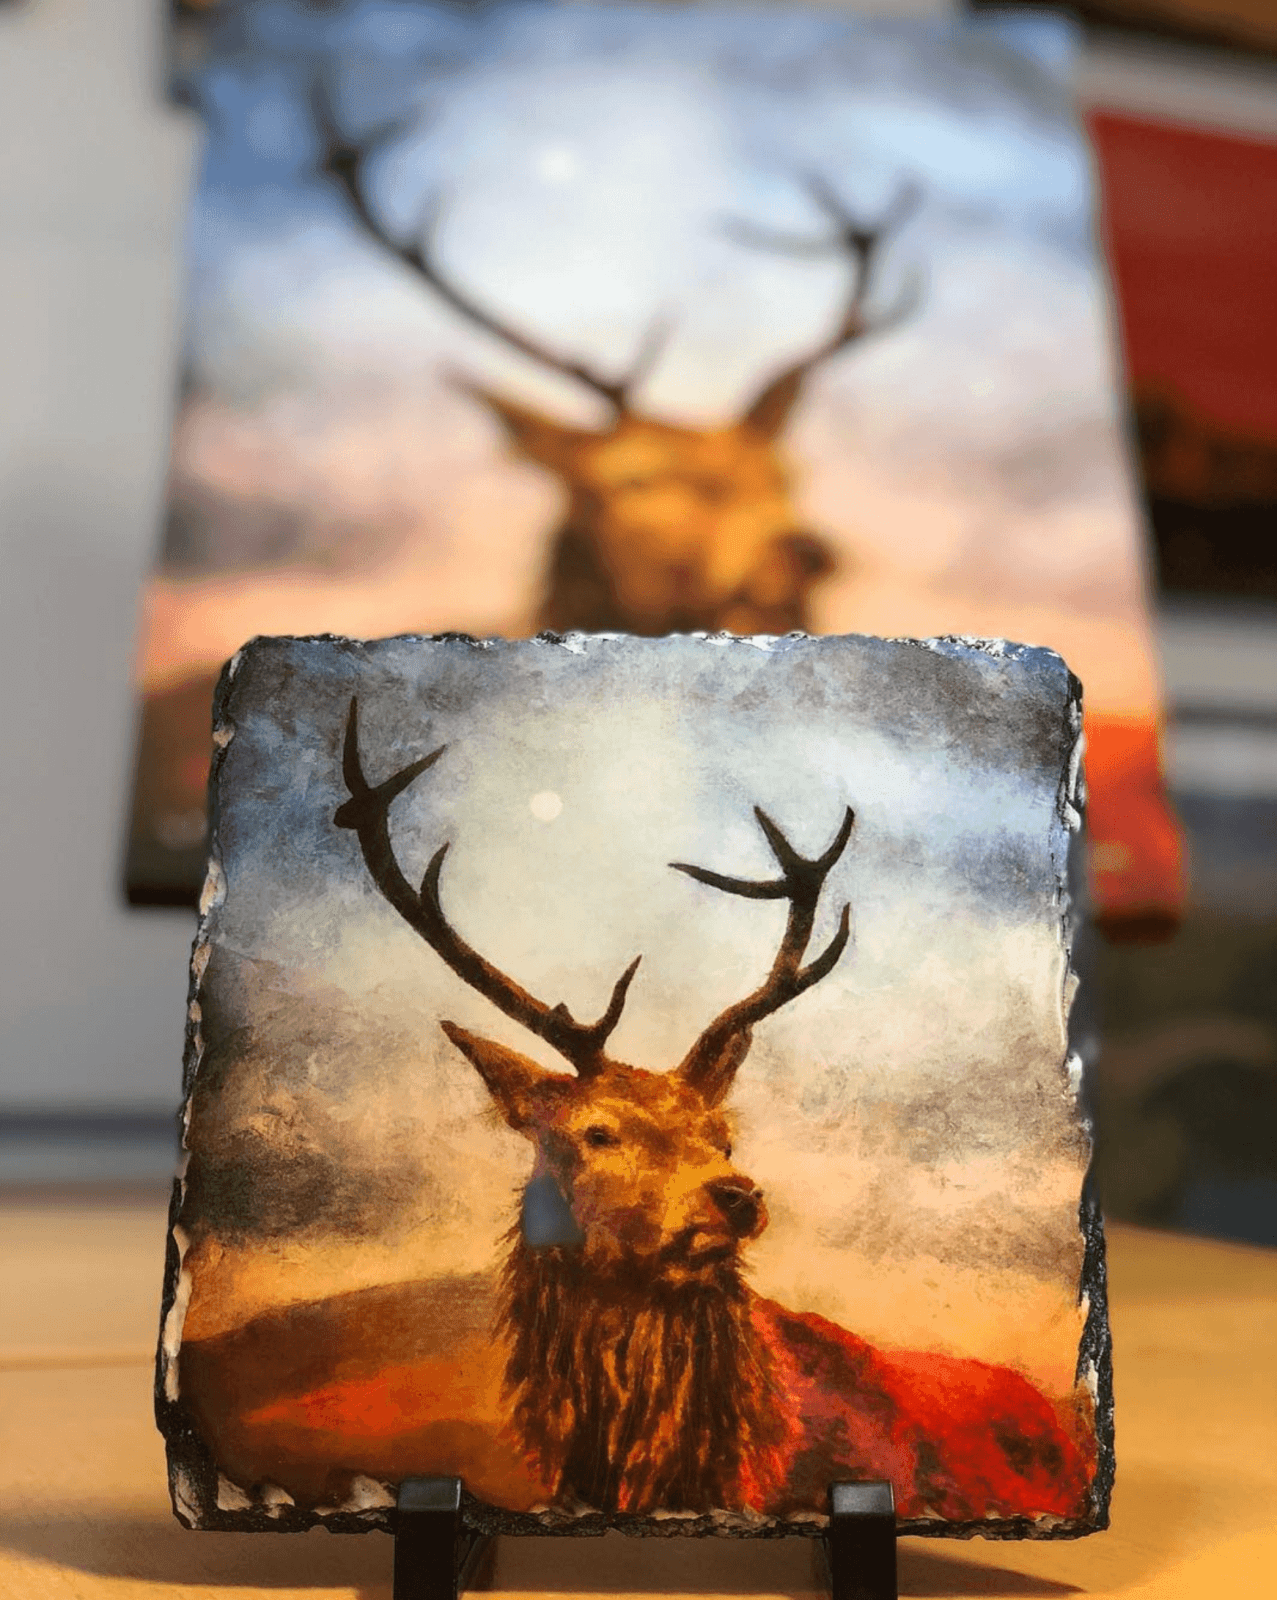 Loch Faskally Dusk Scottish Slate Art-Slate Art-Scottish Lochs & Mountains Art Gallery-Paintings, Prints, Homeware, Art Gifts From Scotland By Scottish Artist Kevin Hunter